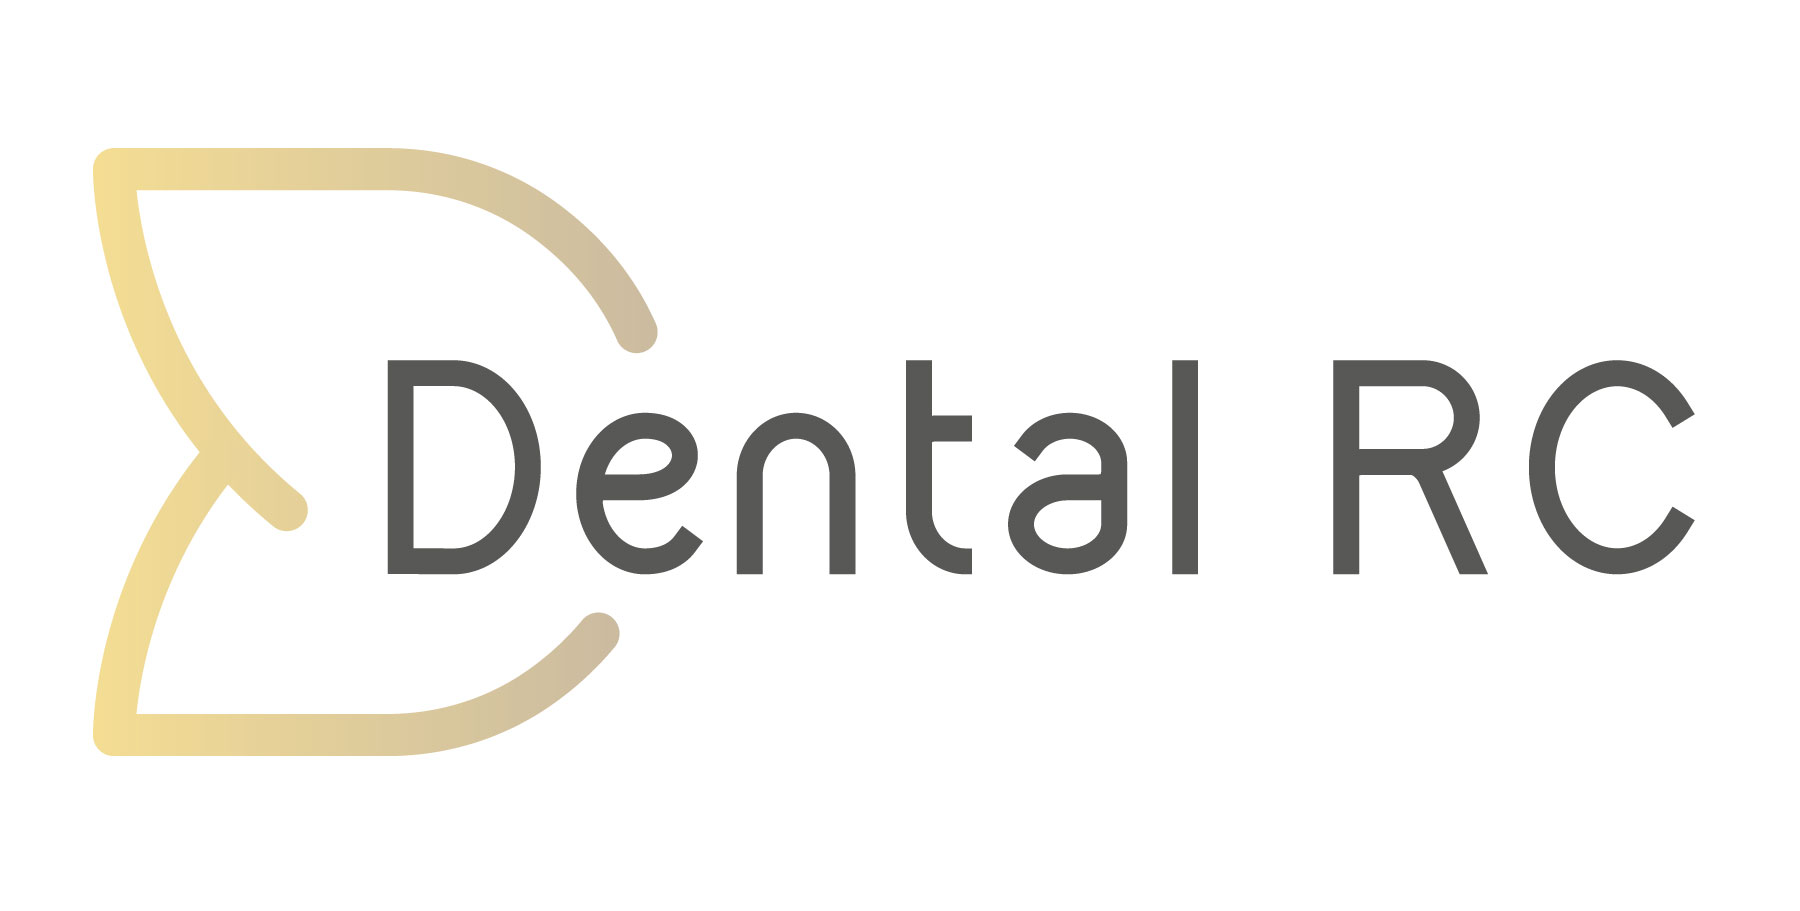 Dental RC